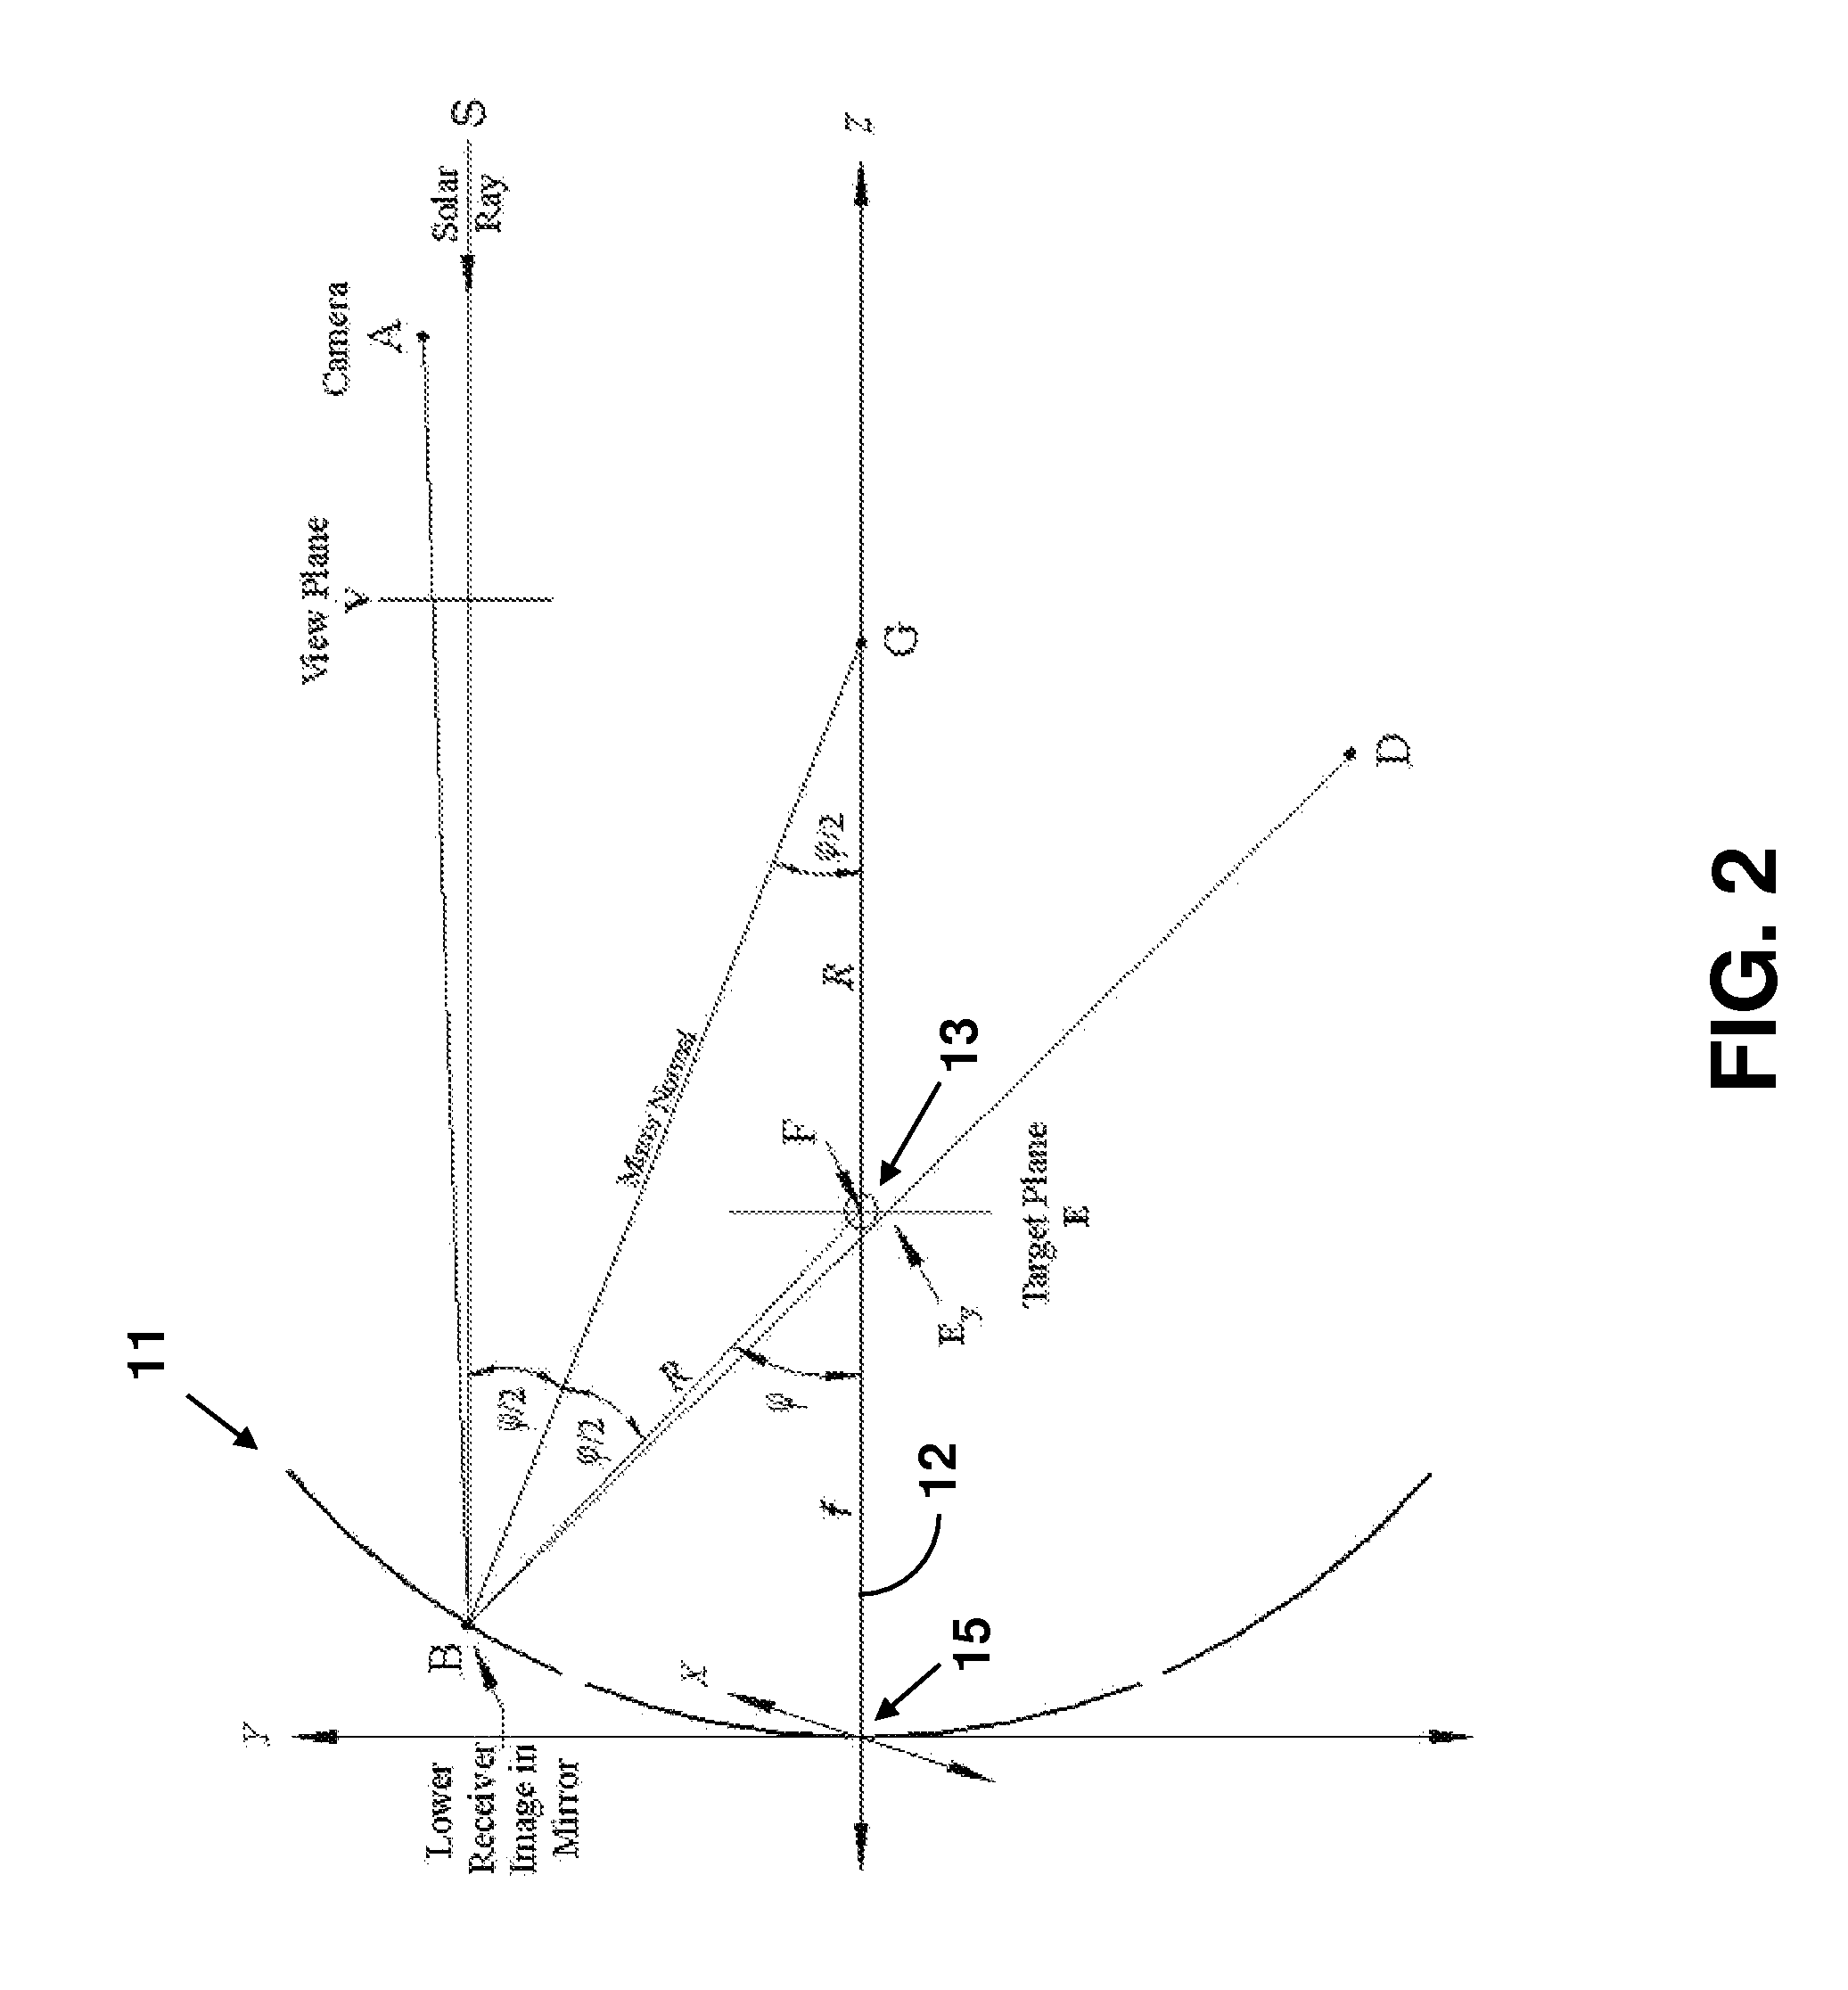 Alignment method for parabolic trough solar concentrators